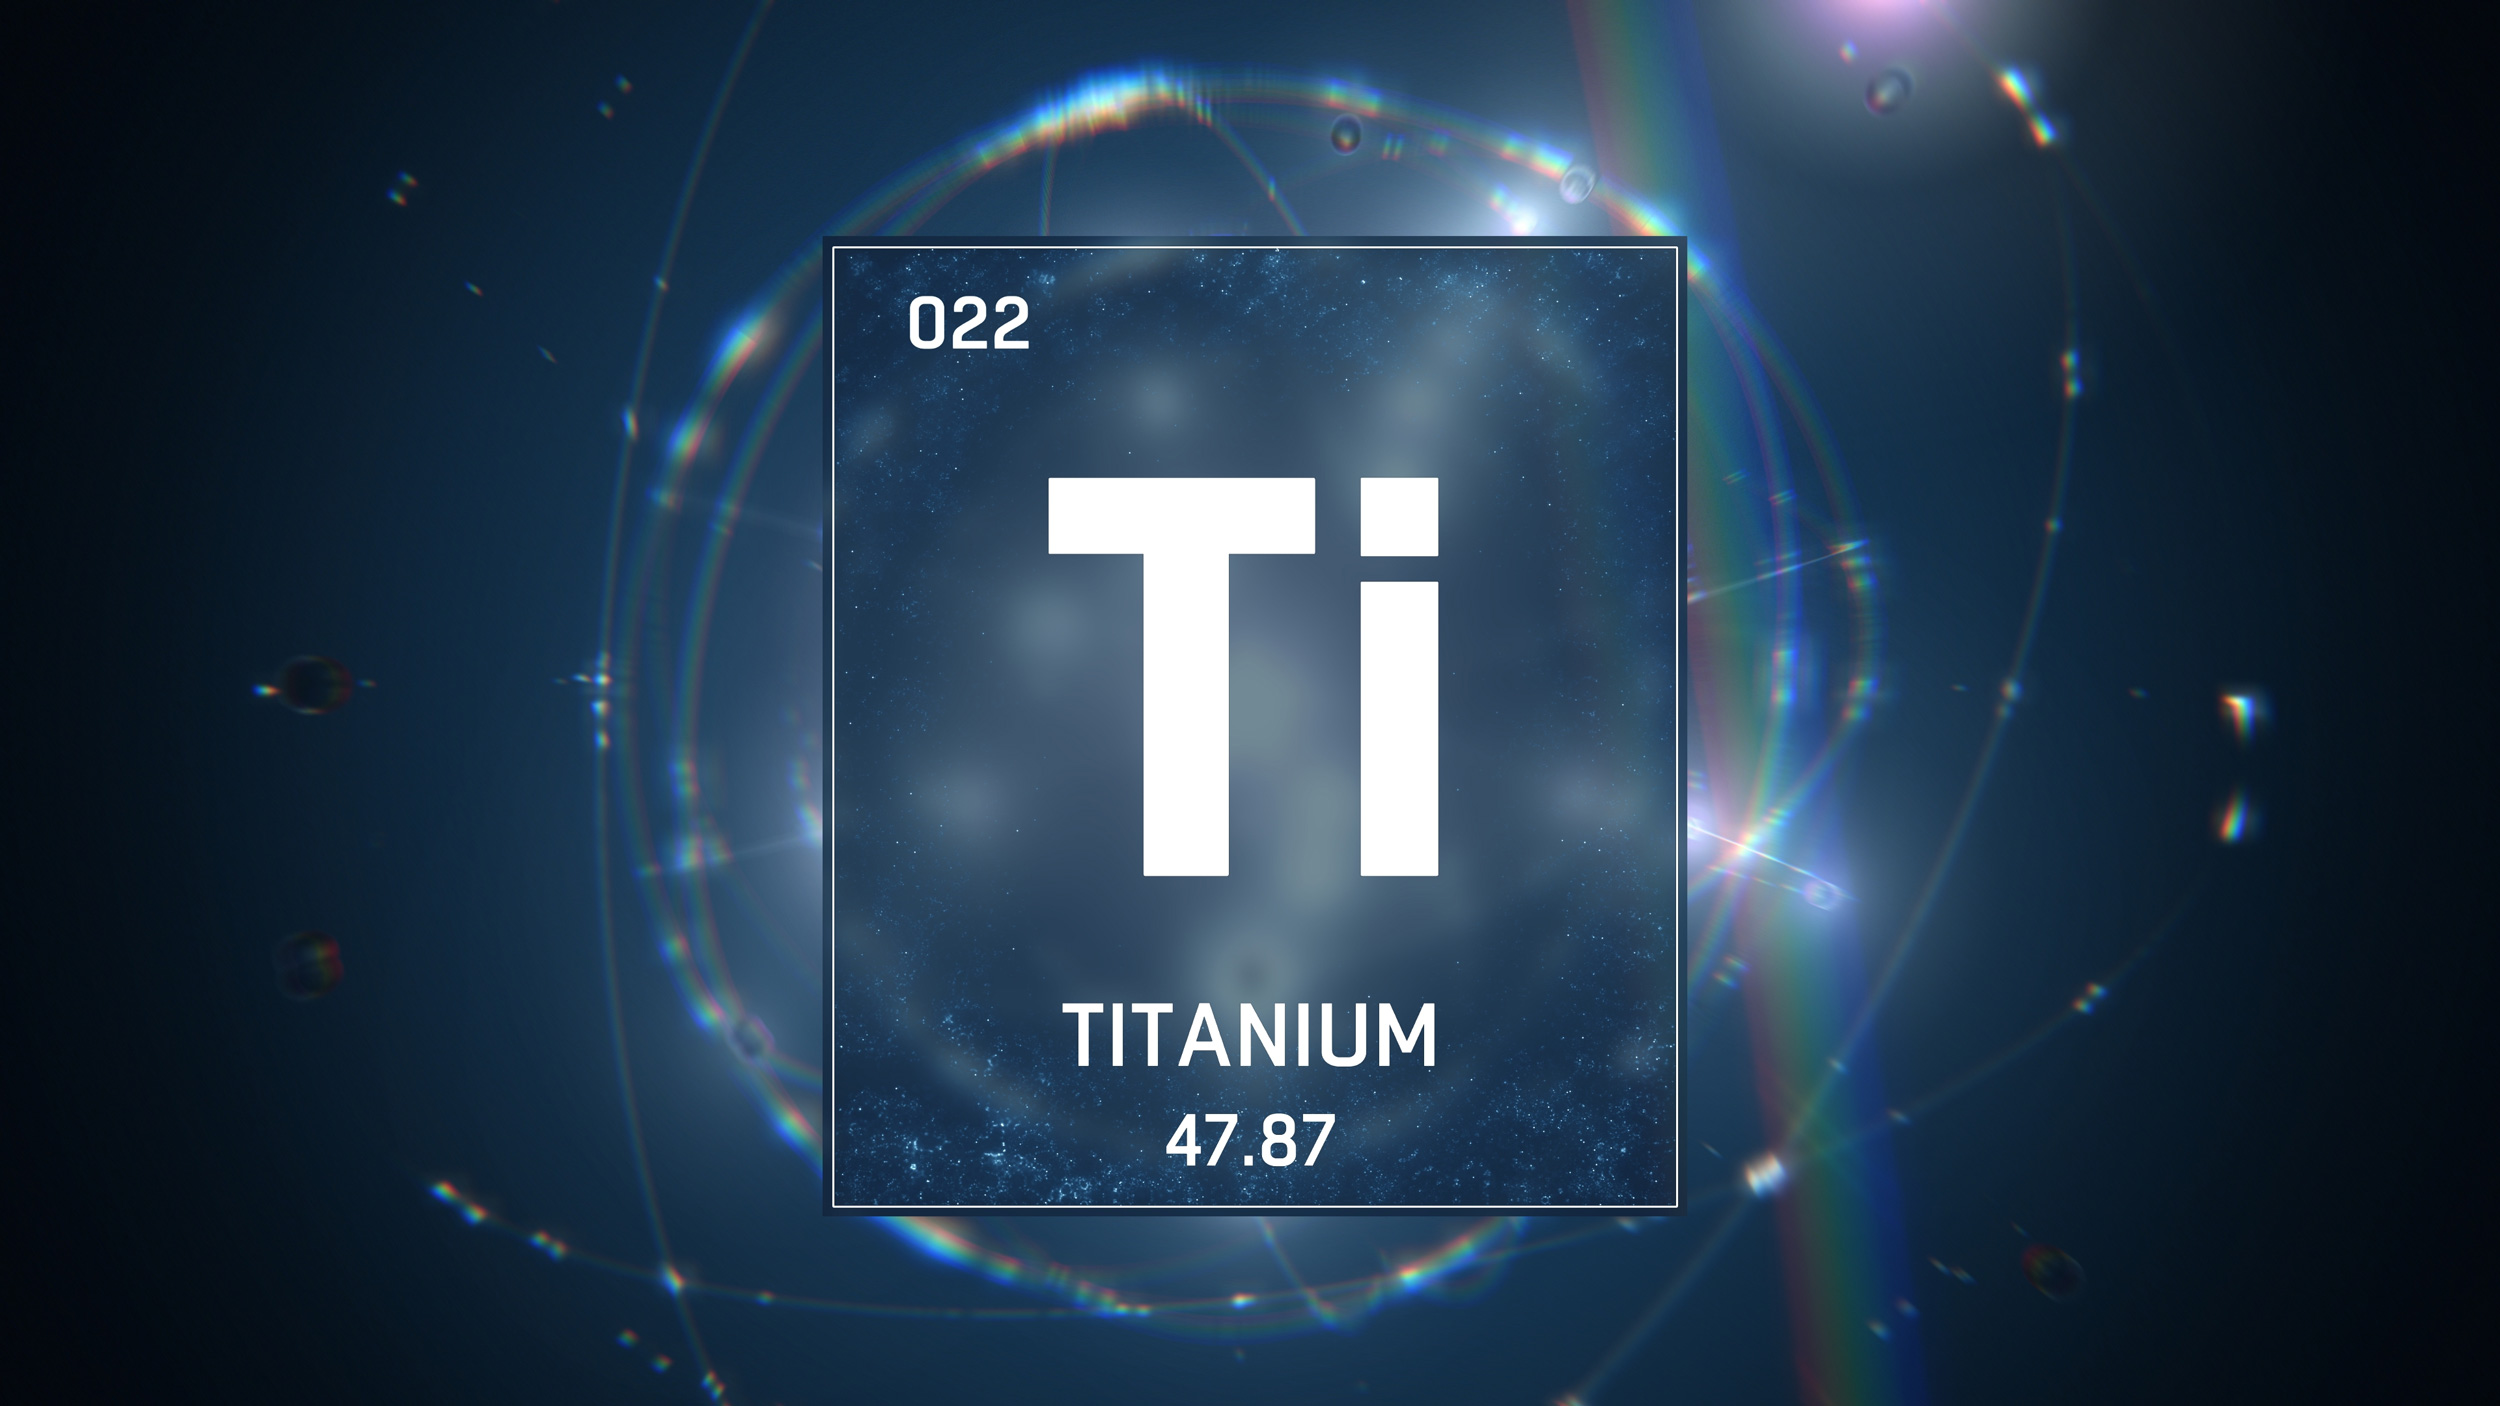 Successful titanium production from commercial pilot plant